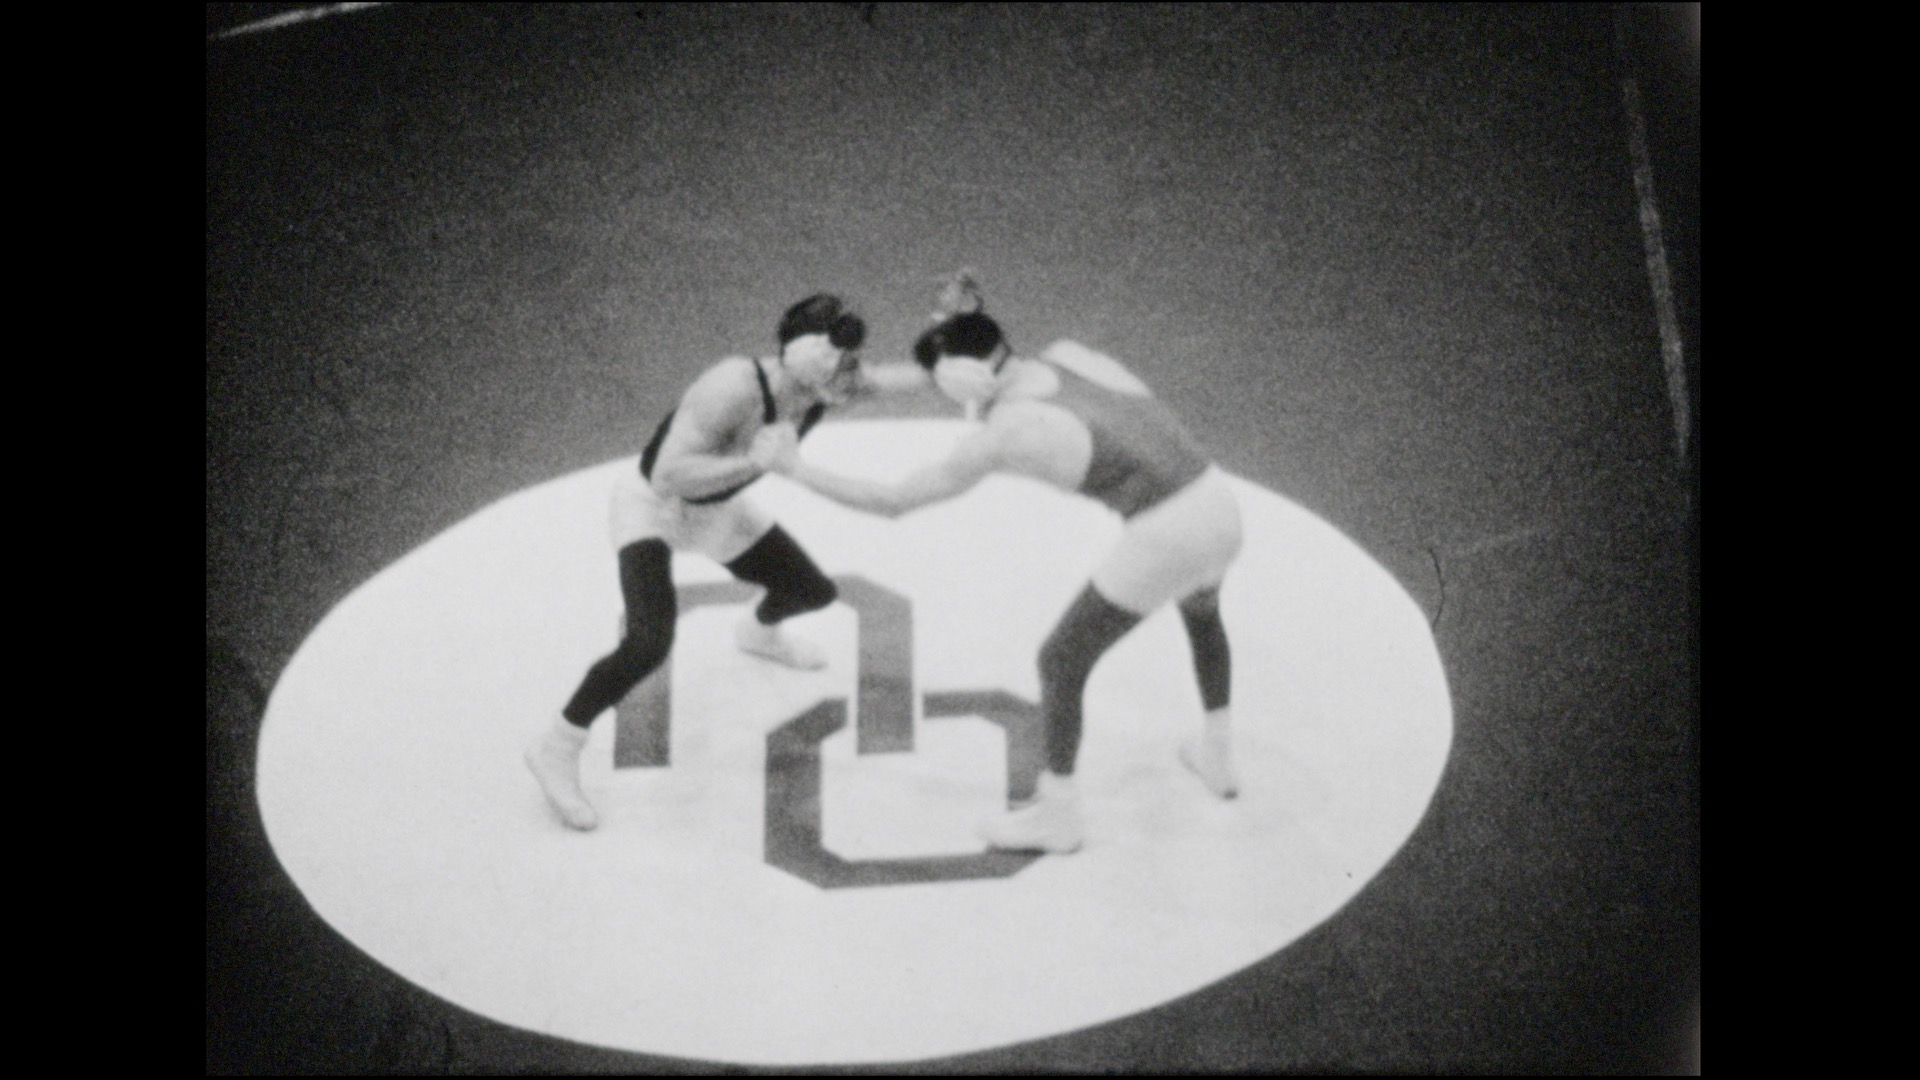 MSU Wrestling: Behm vs. McGuire at Oklahoma, 1967